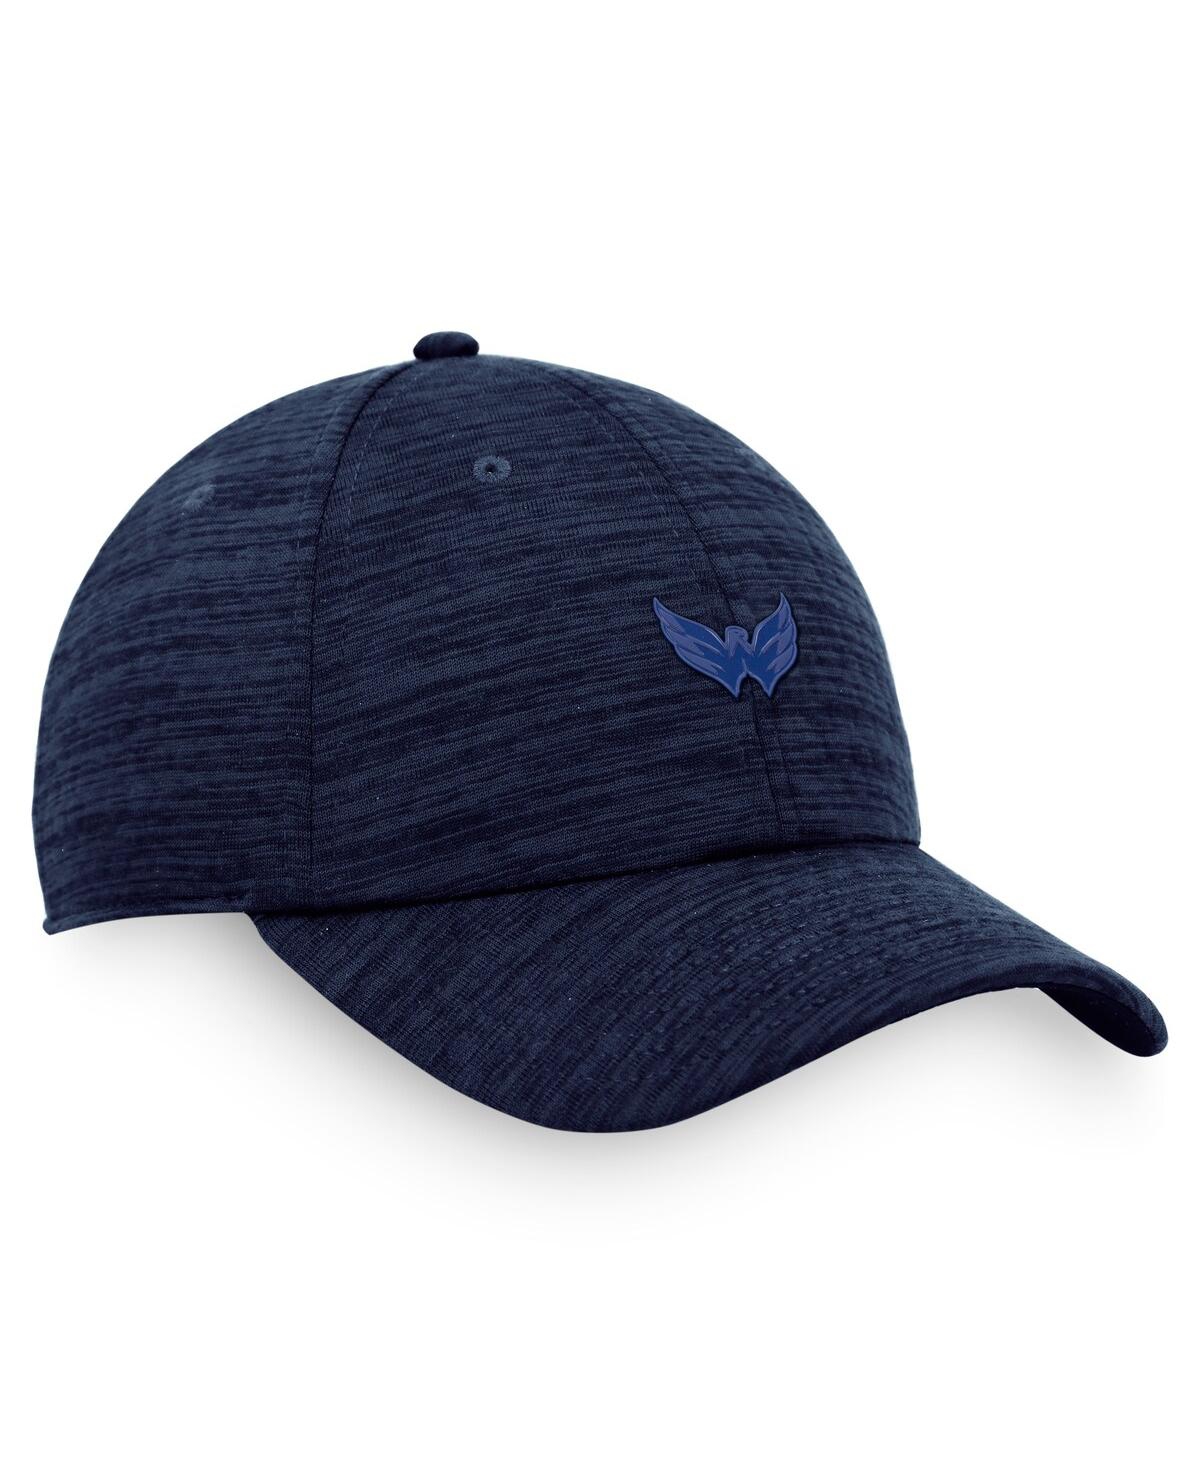 Shop Fanatics Men's  Navy Washington Capitals Authentic Pro Road Snapback Hat